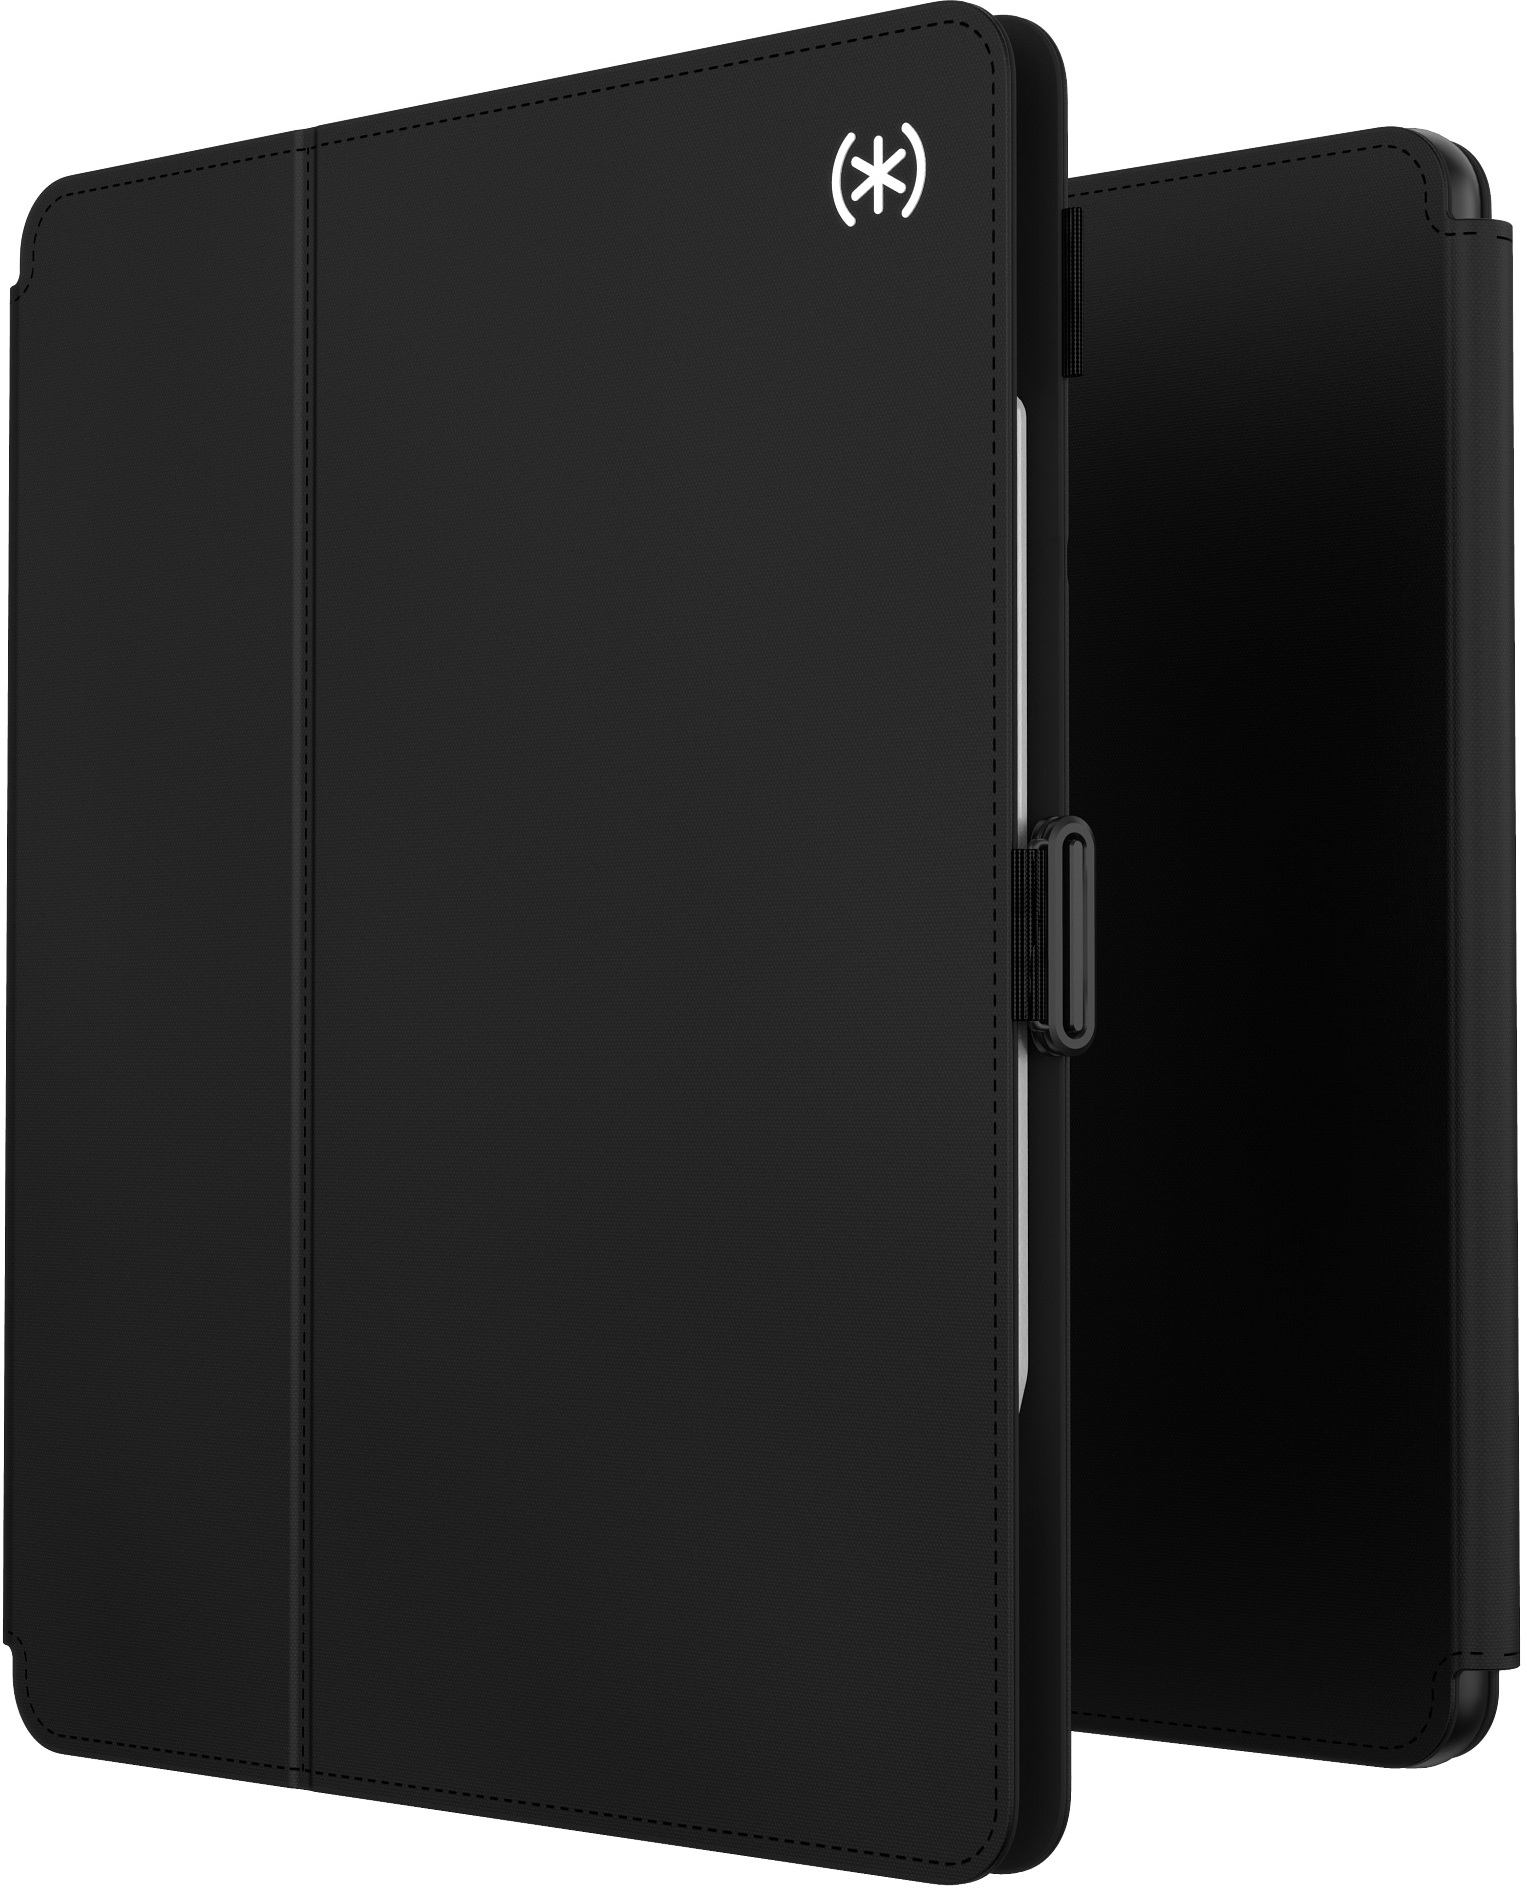 Speck Balance Folio Case Apple iPad Pro 12.9 inch (2018/2022) Black - with Micro